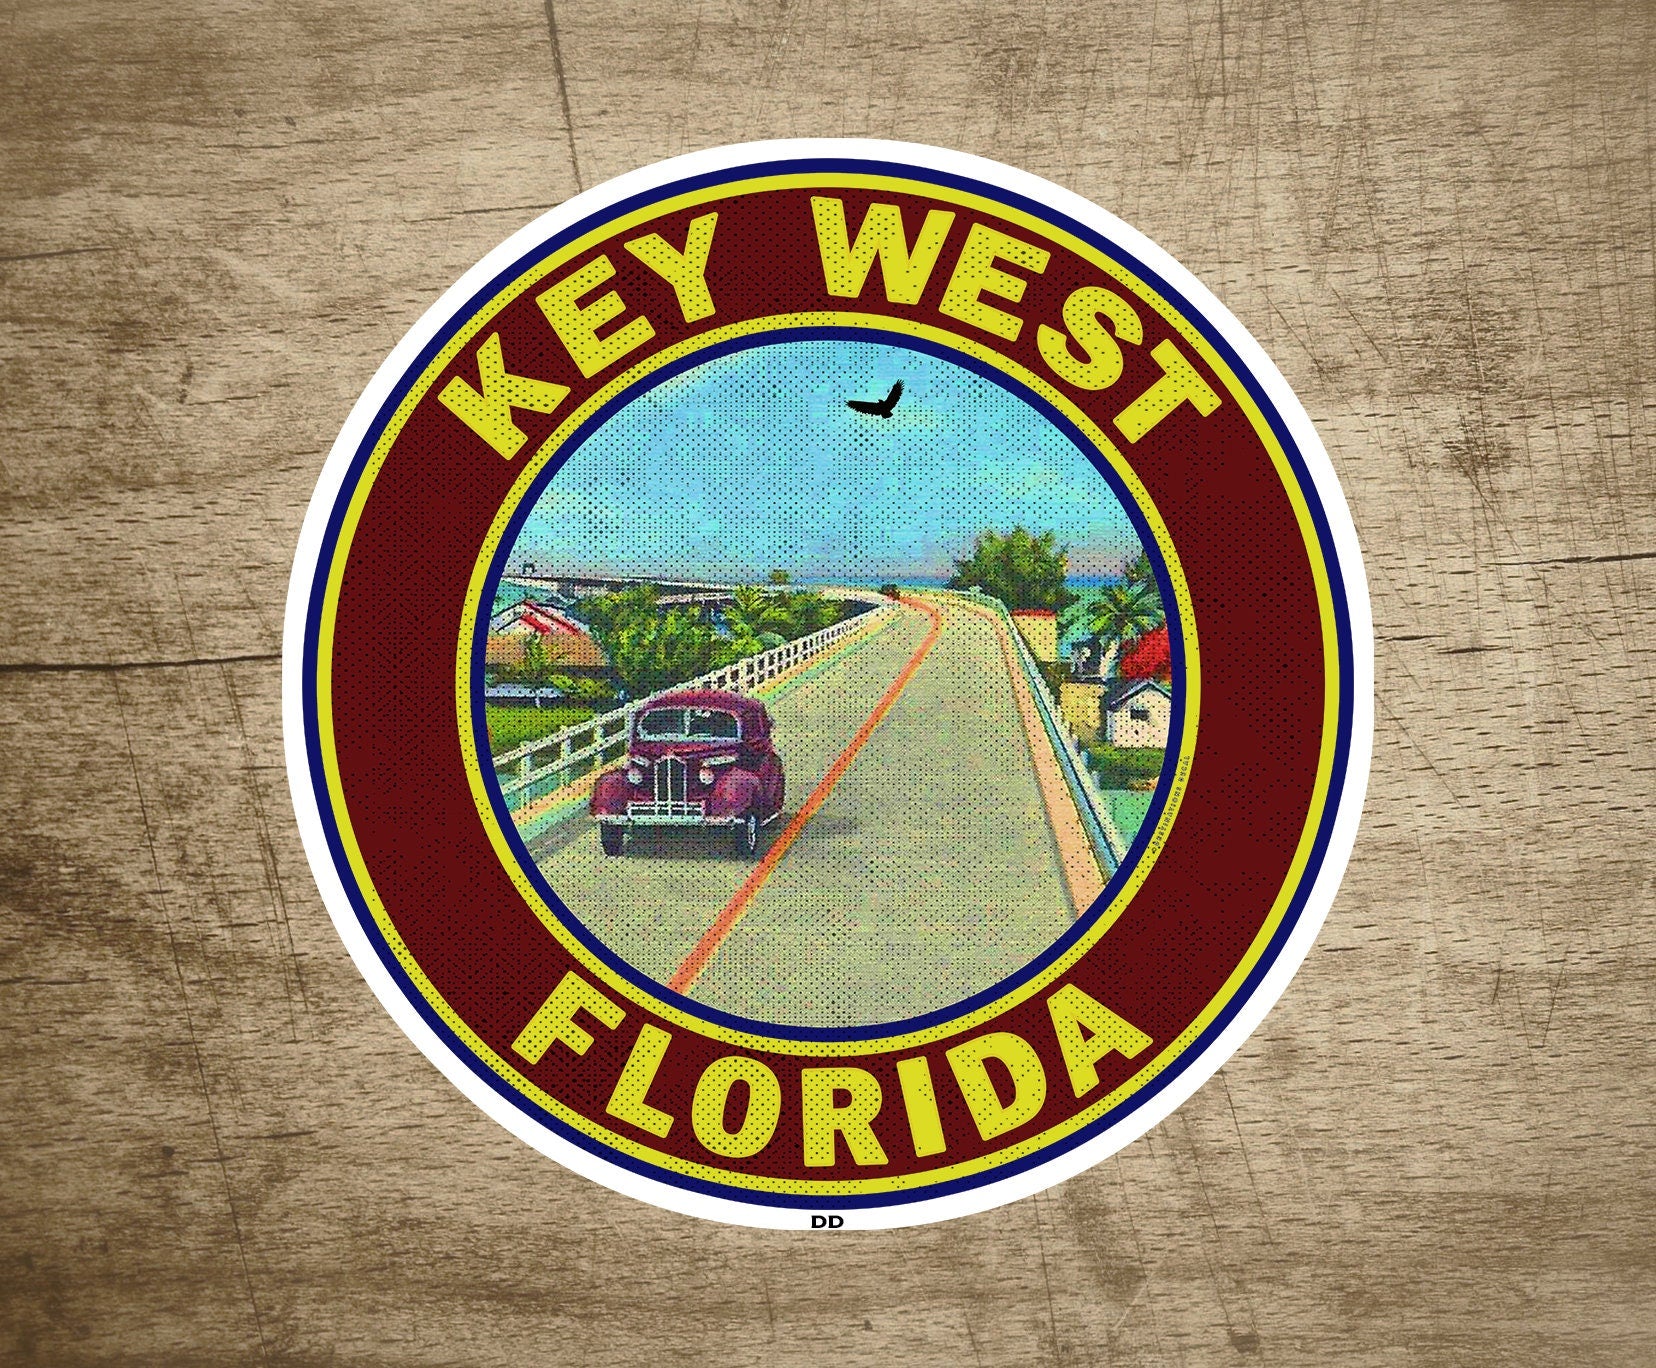 Key West Overseas Highway Sticker Decal 3" x 3" Florida Keys Vintage Style